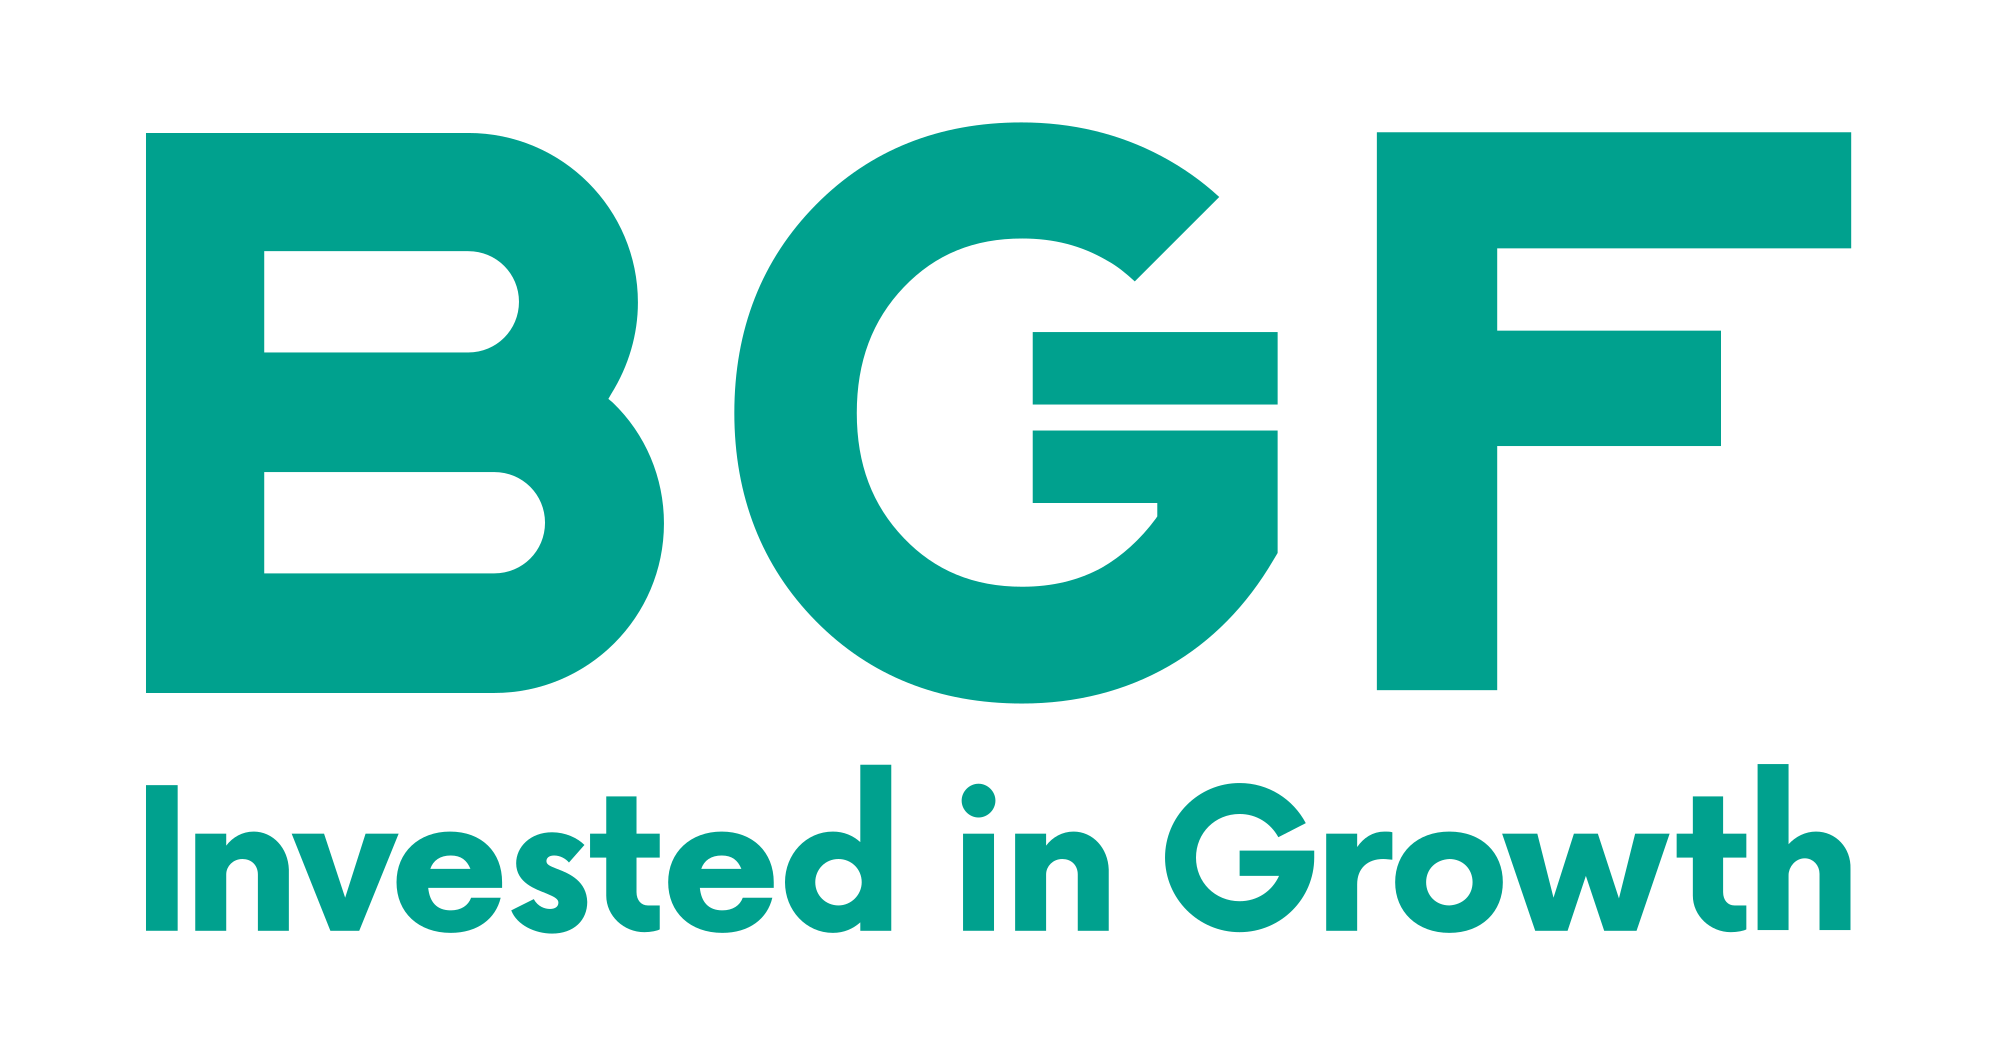 Bgf Investments